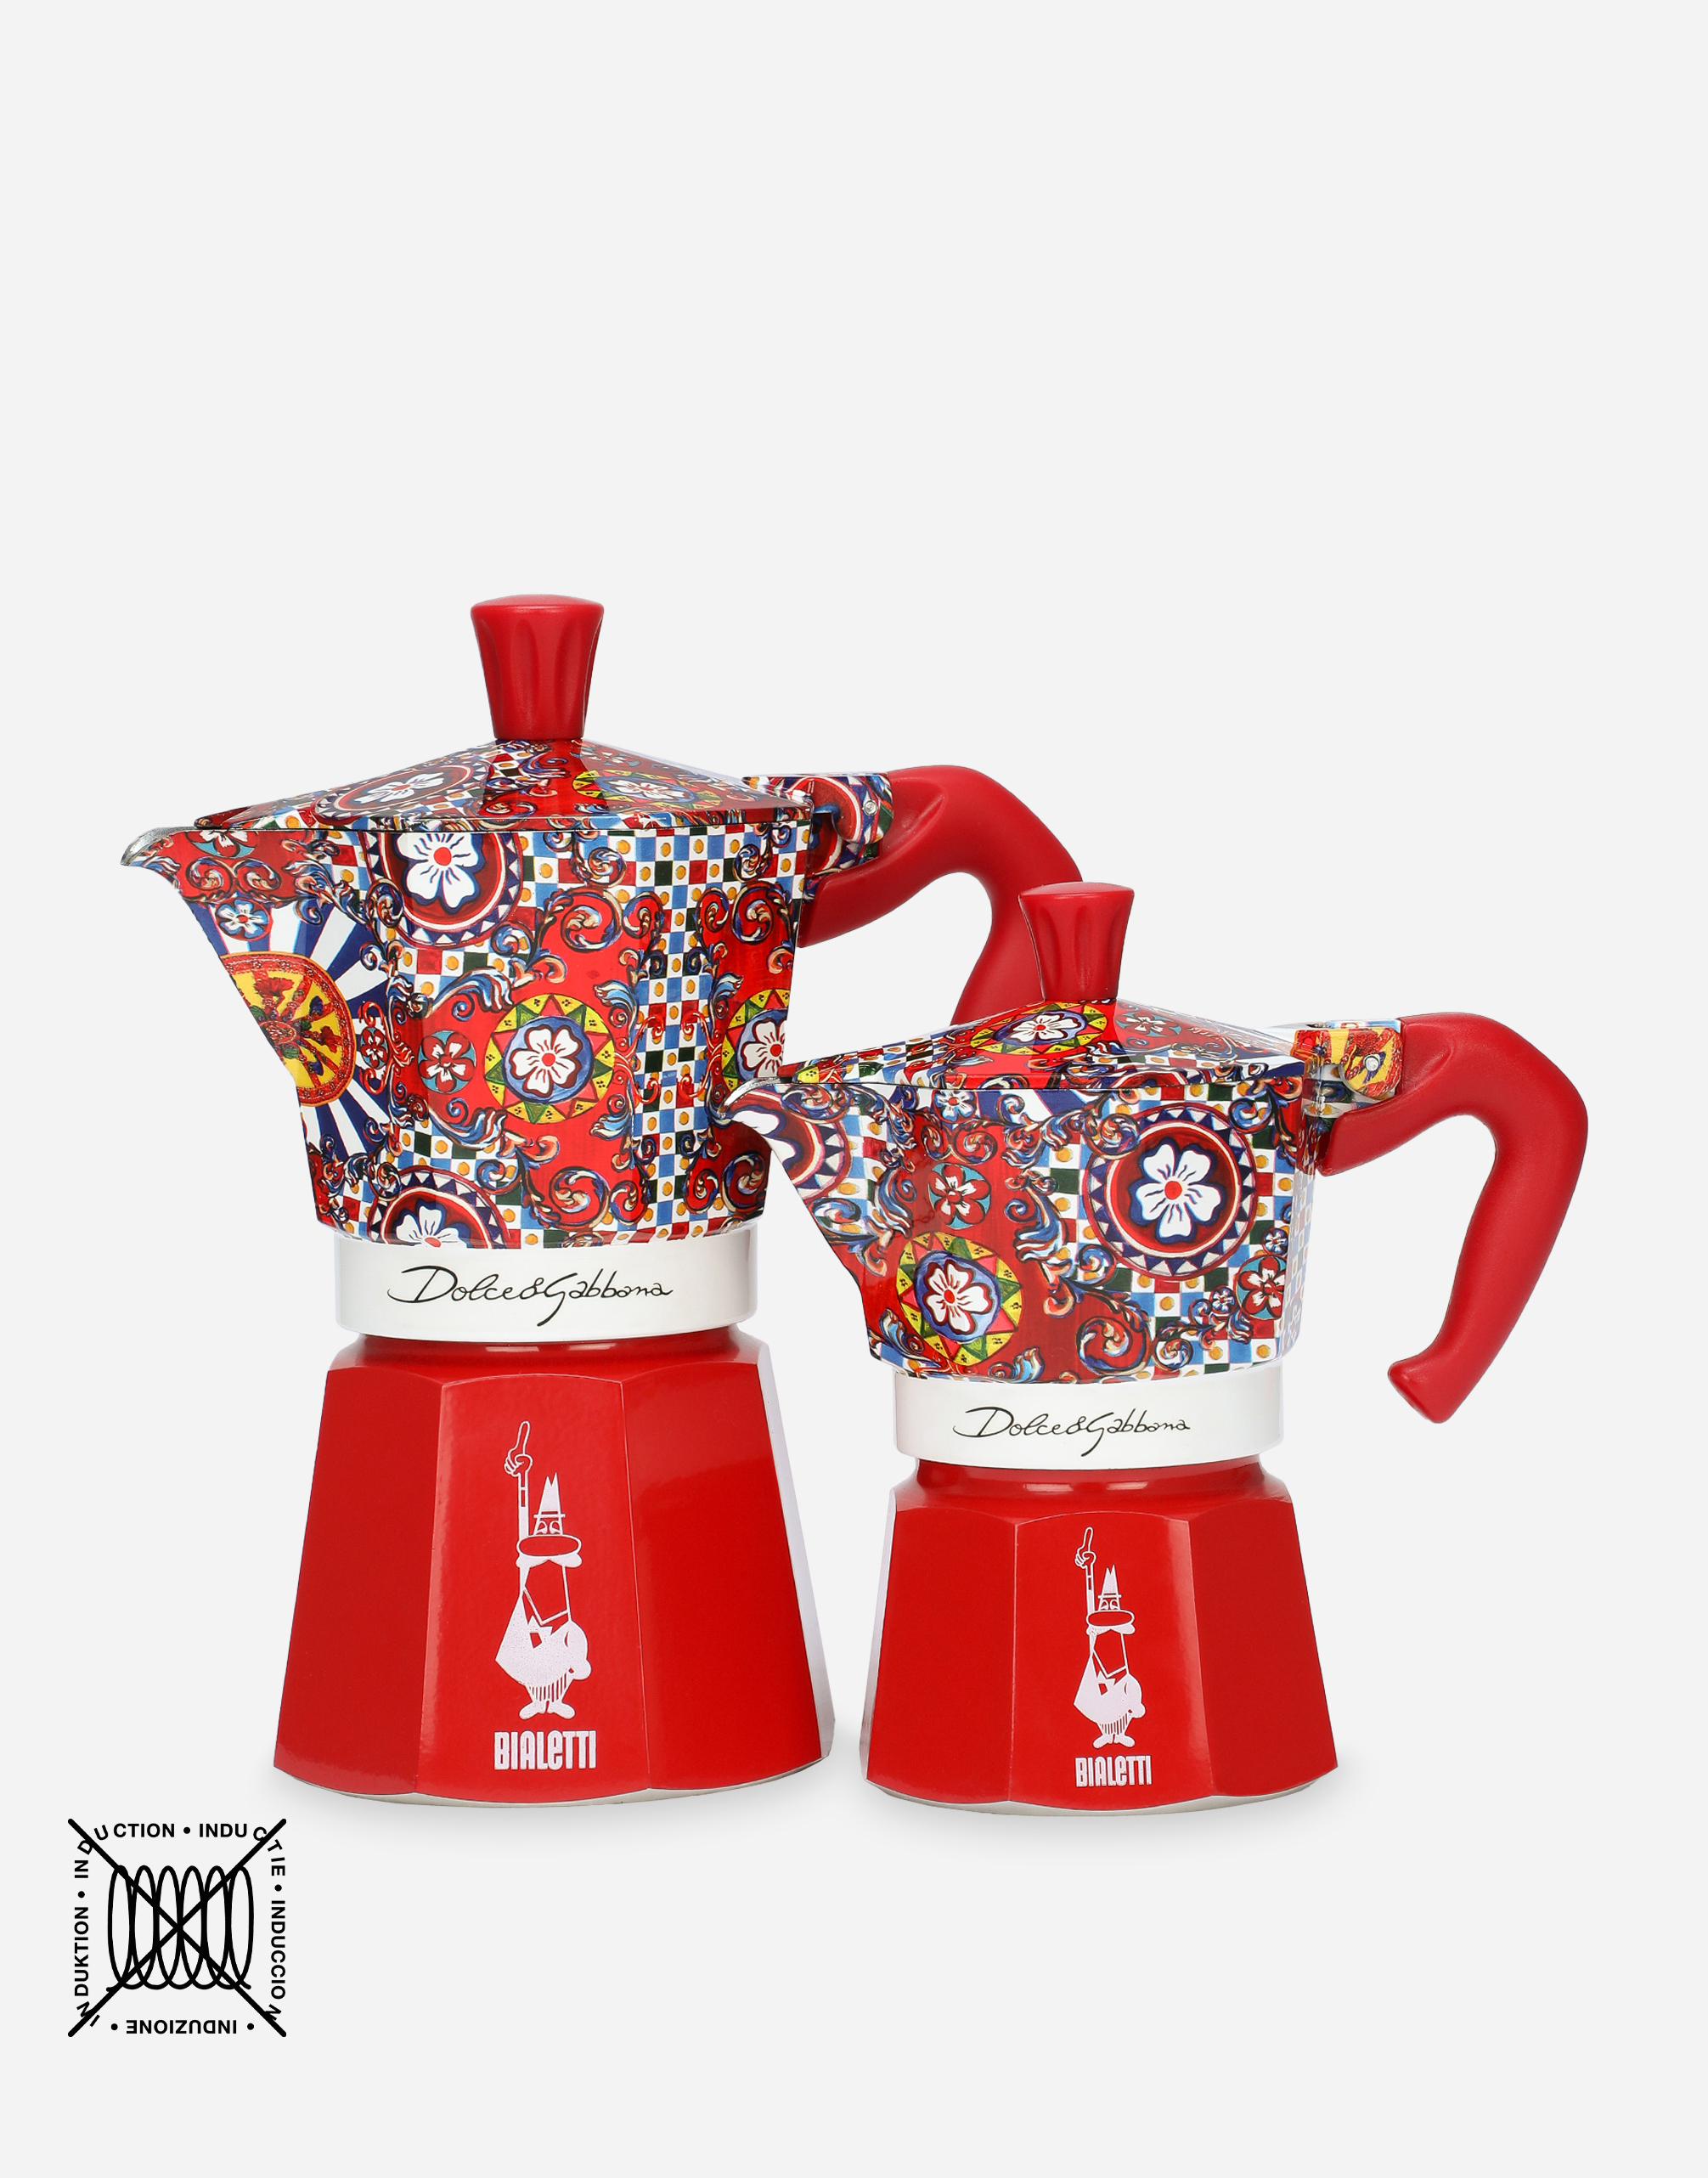 Dolce & Gabbana Гейзерная кофеварка среднего формата Moka Express BIALETTI DOLCE&GABBANA |717xauto